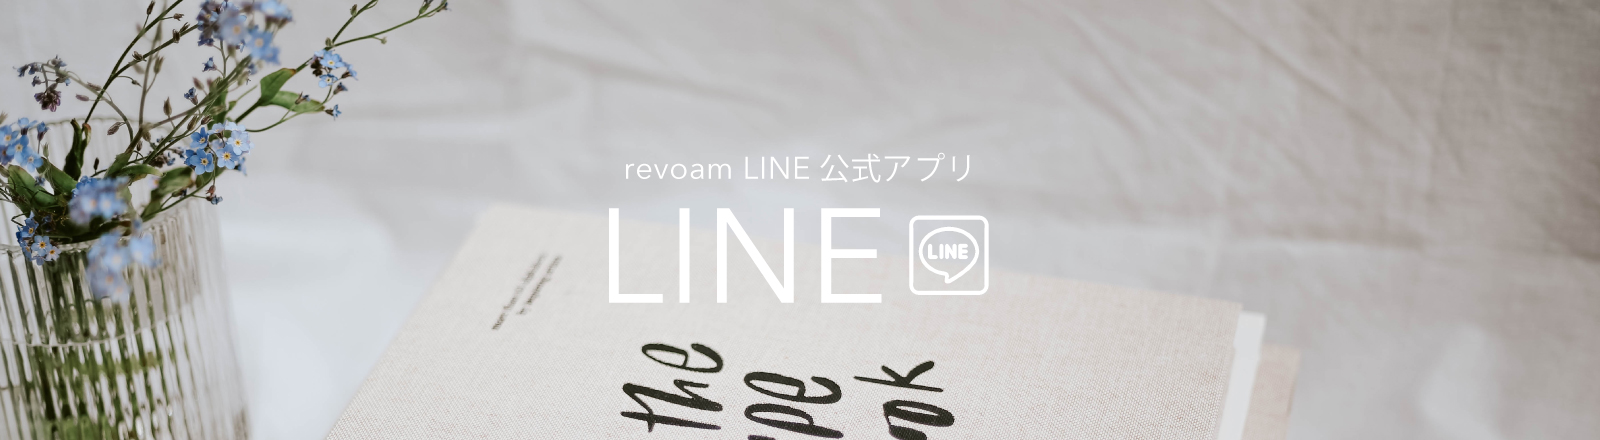 revoam公式LINEの画像